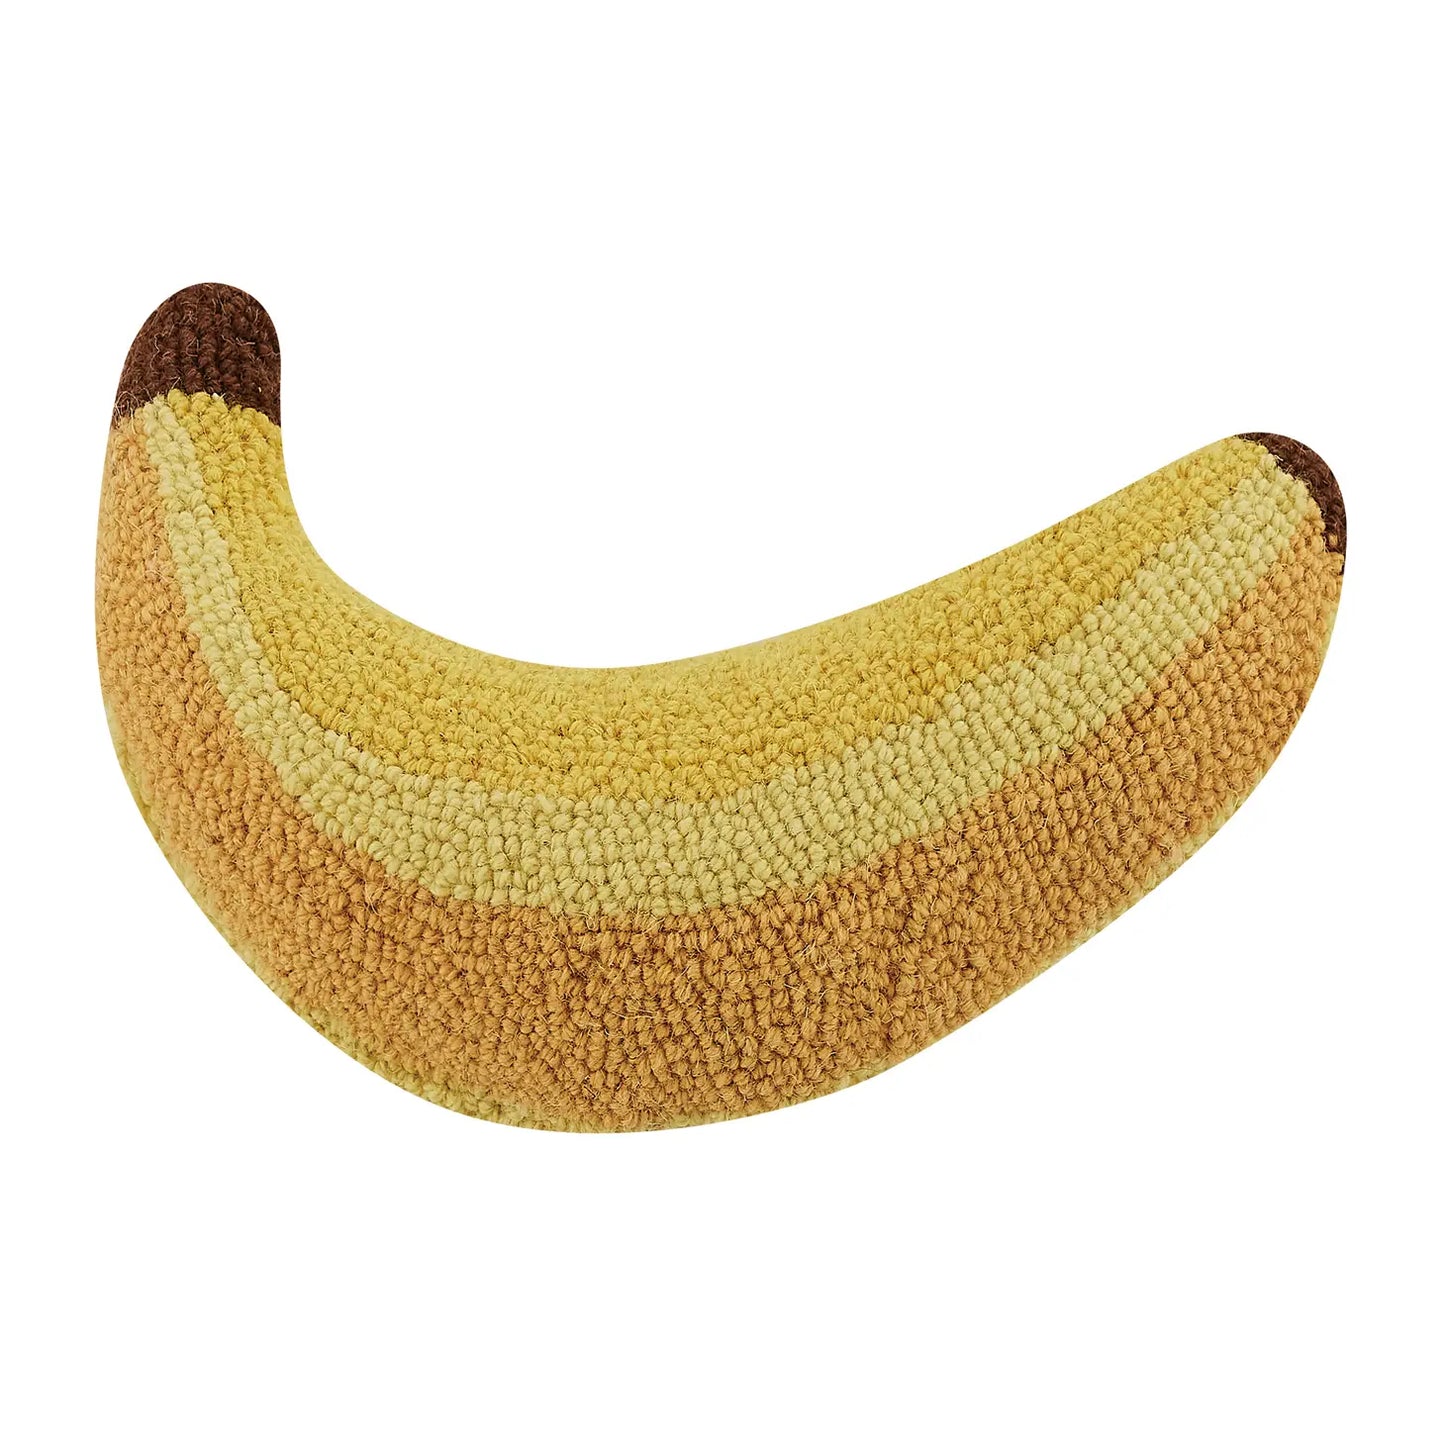 Banana Shaped Hook Pillow